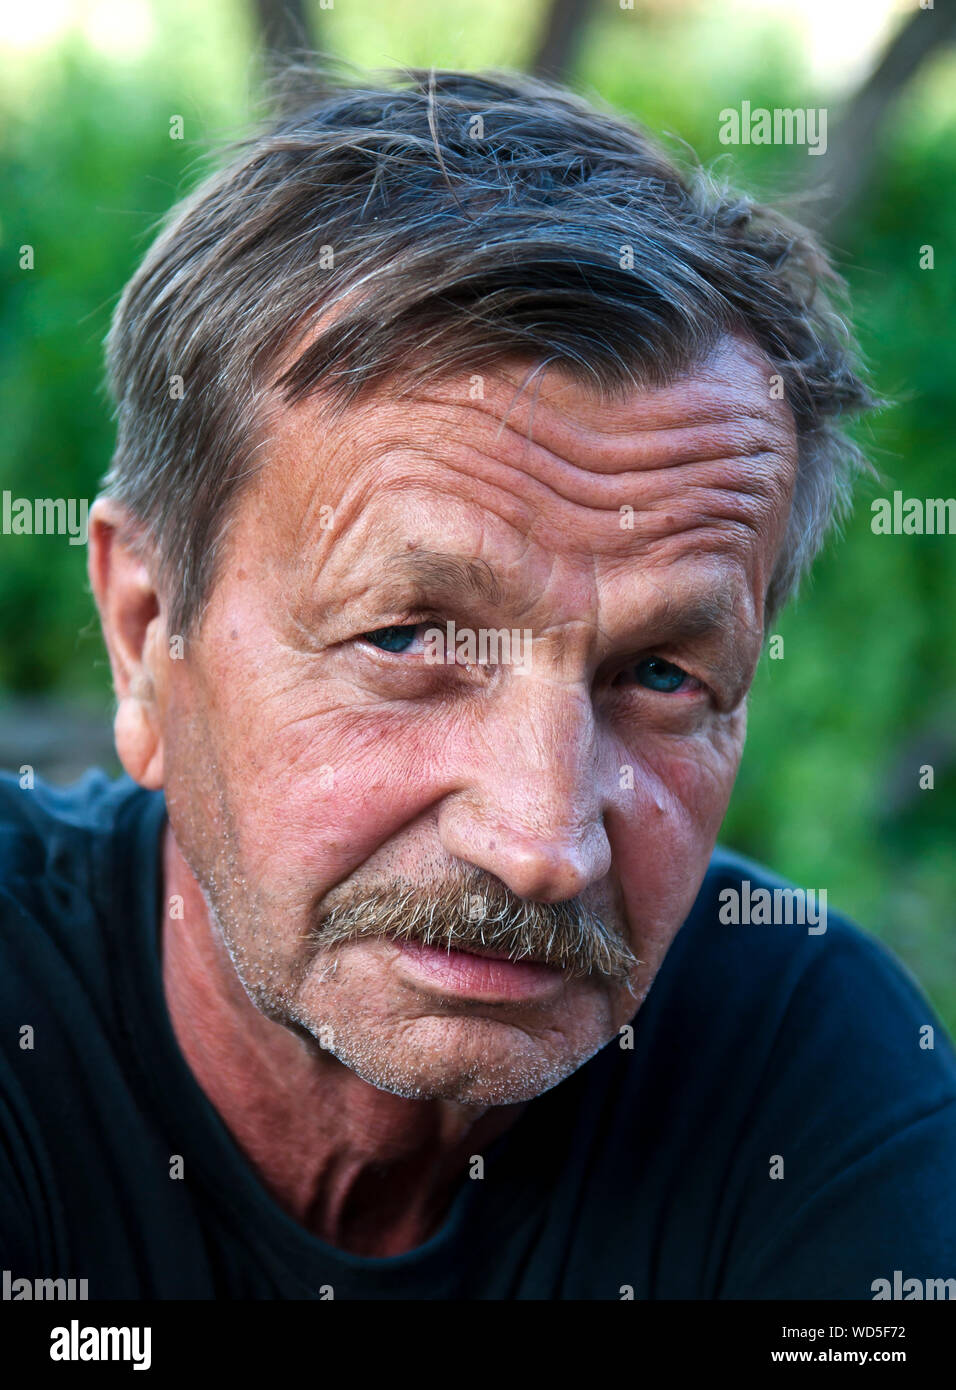 Close-up retrato de confianza hombre Senior Foto de stock